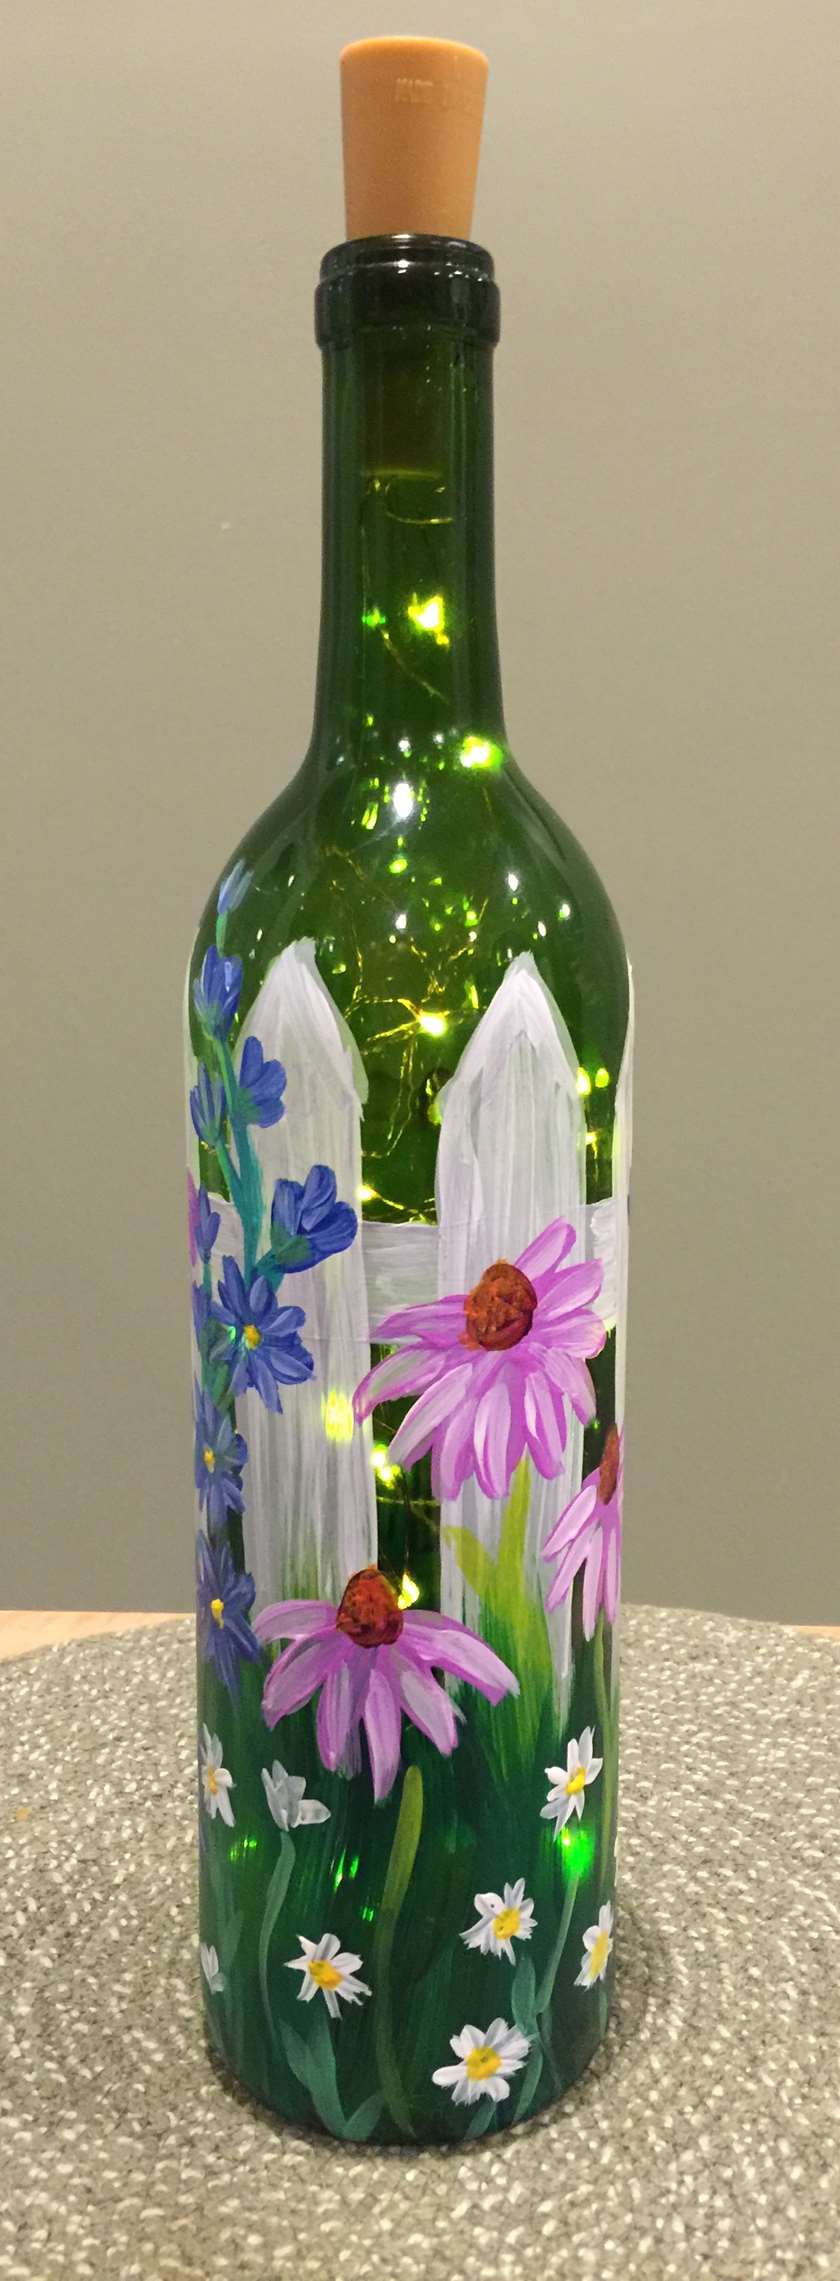 Craft Night: Paint Wine Bottles with Cork Lights!